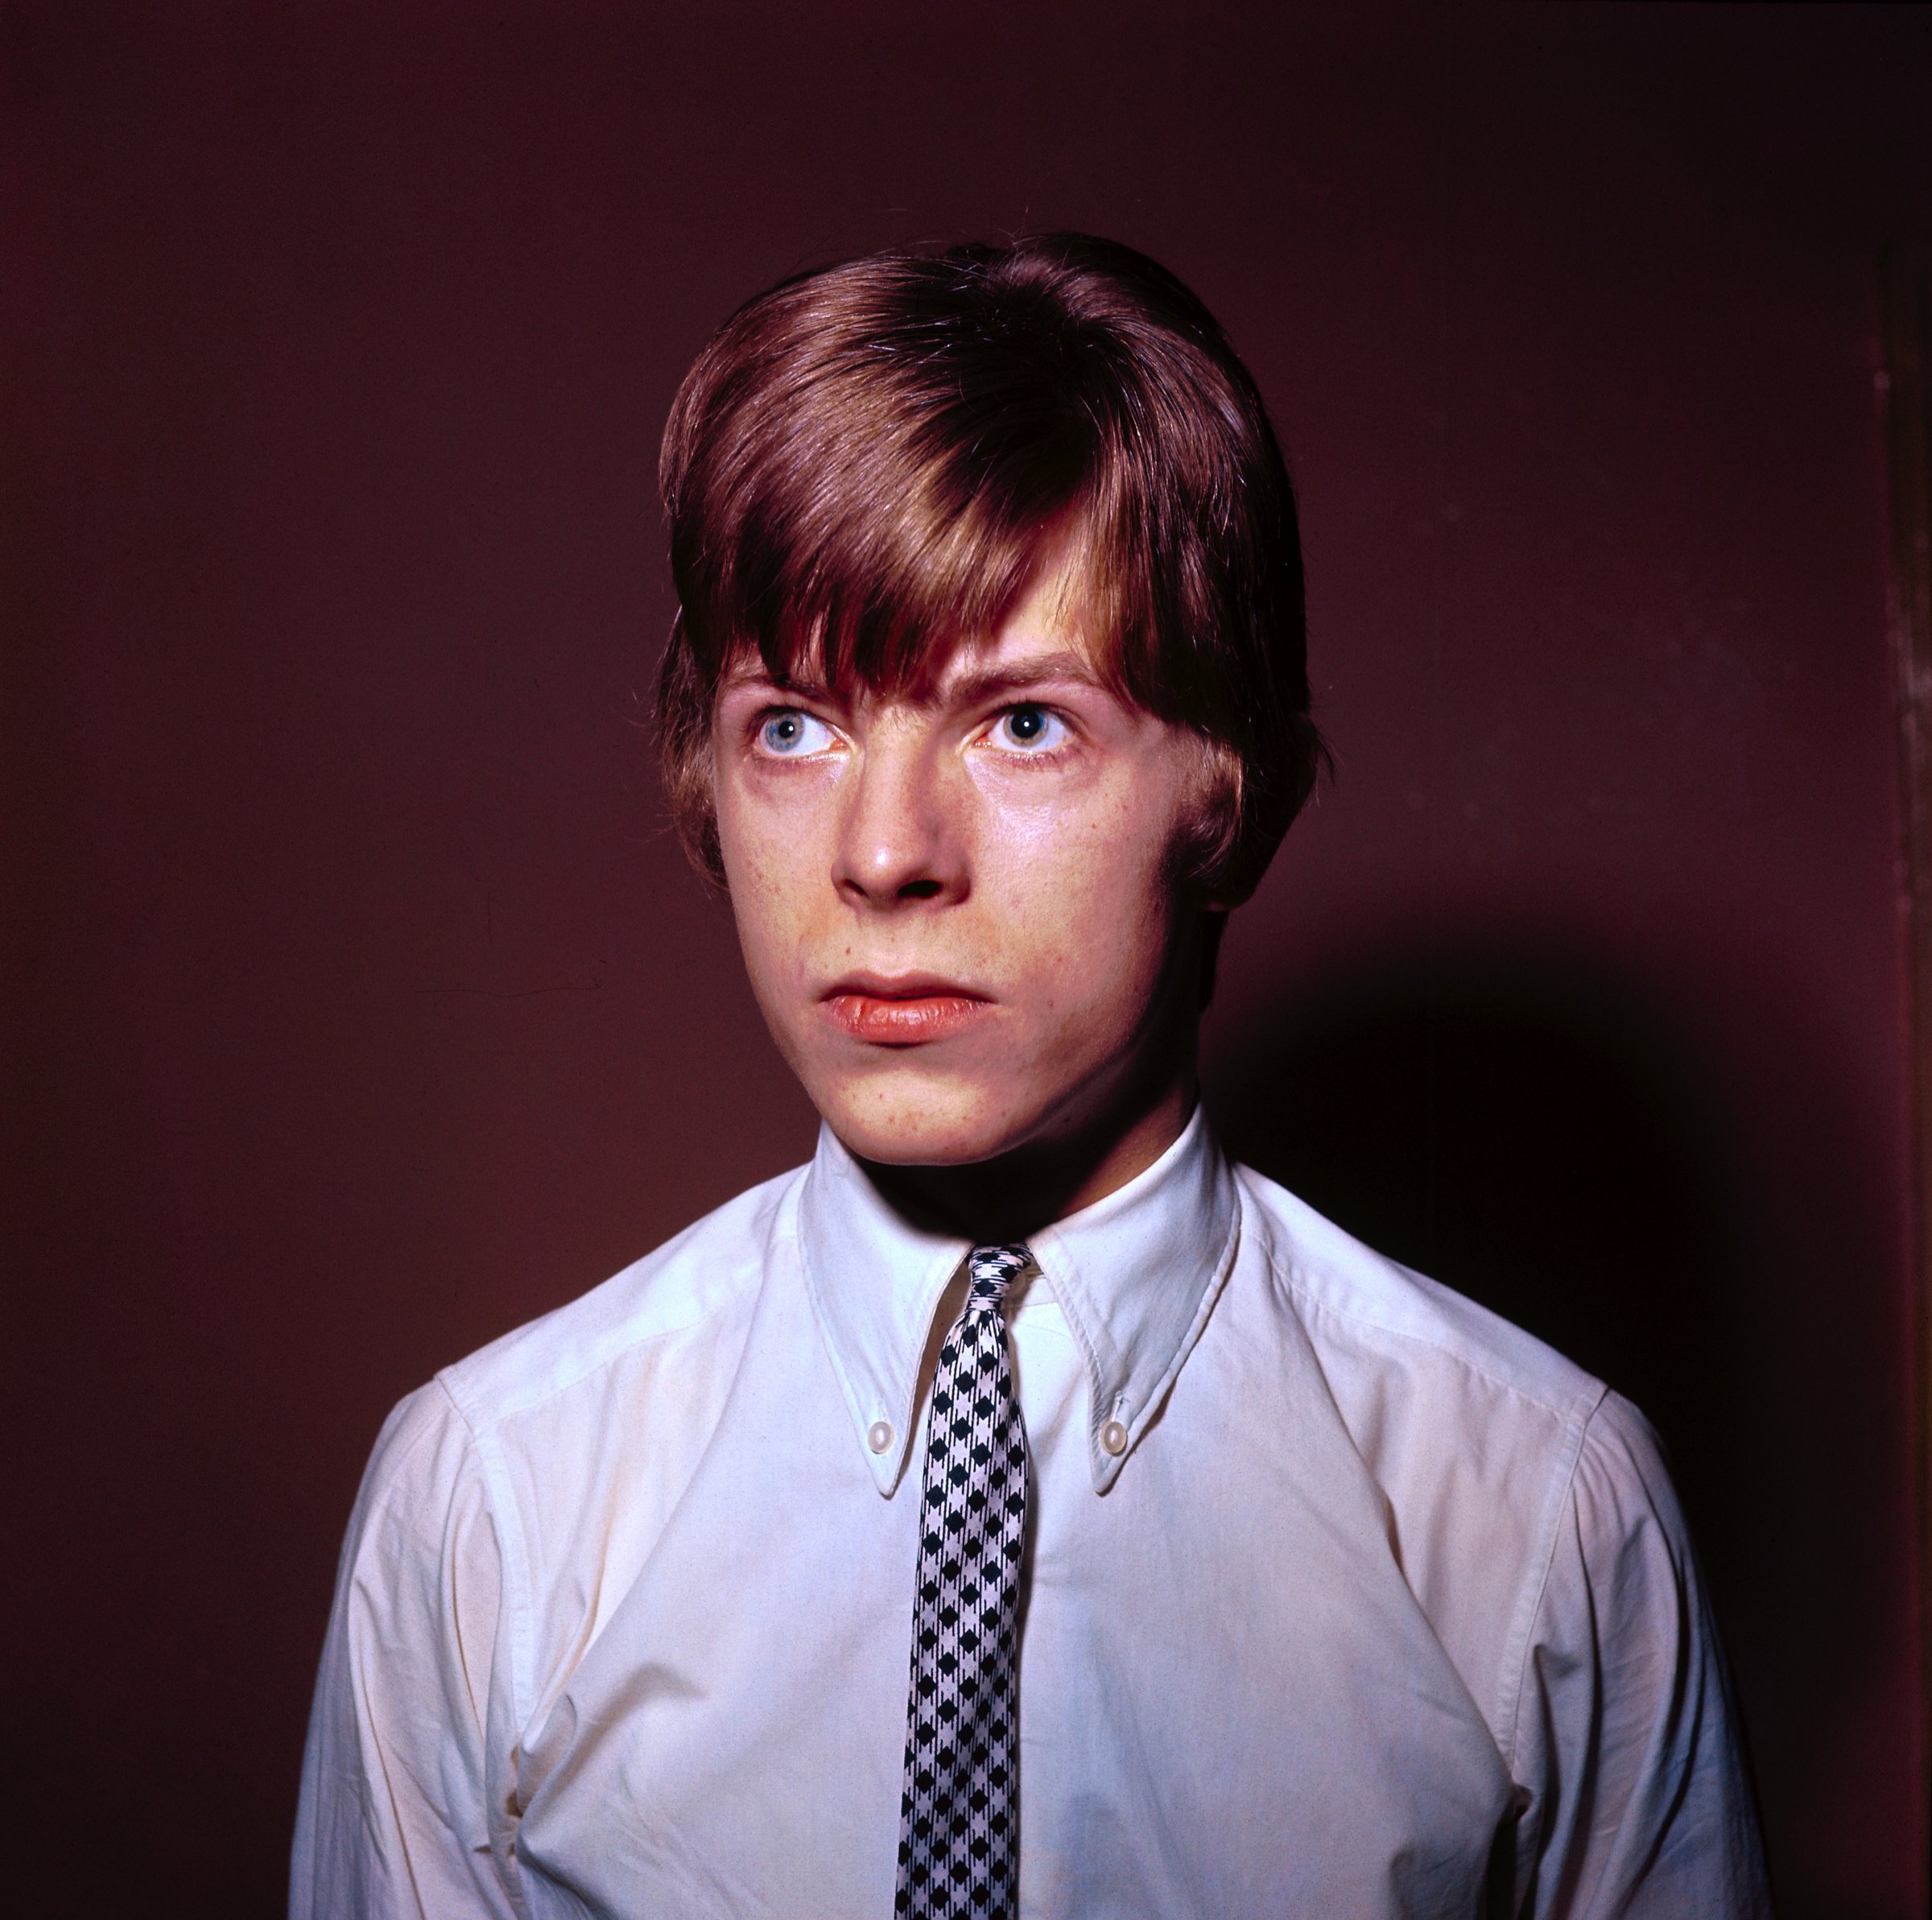 David Bowie is seen c. 1965.